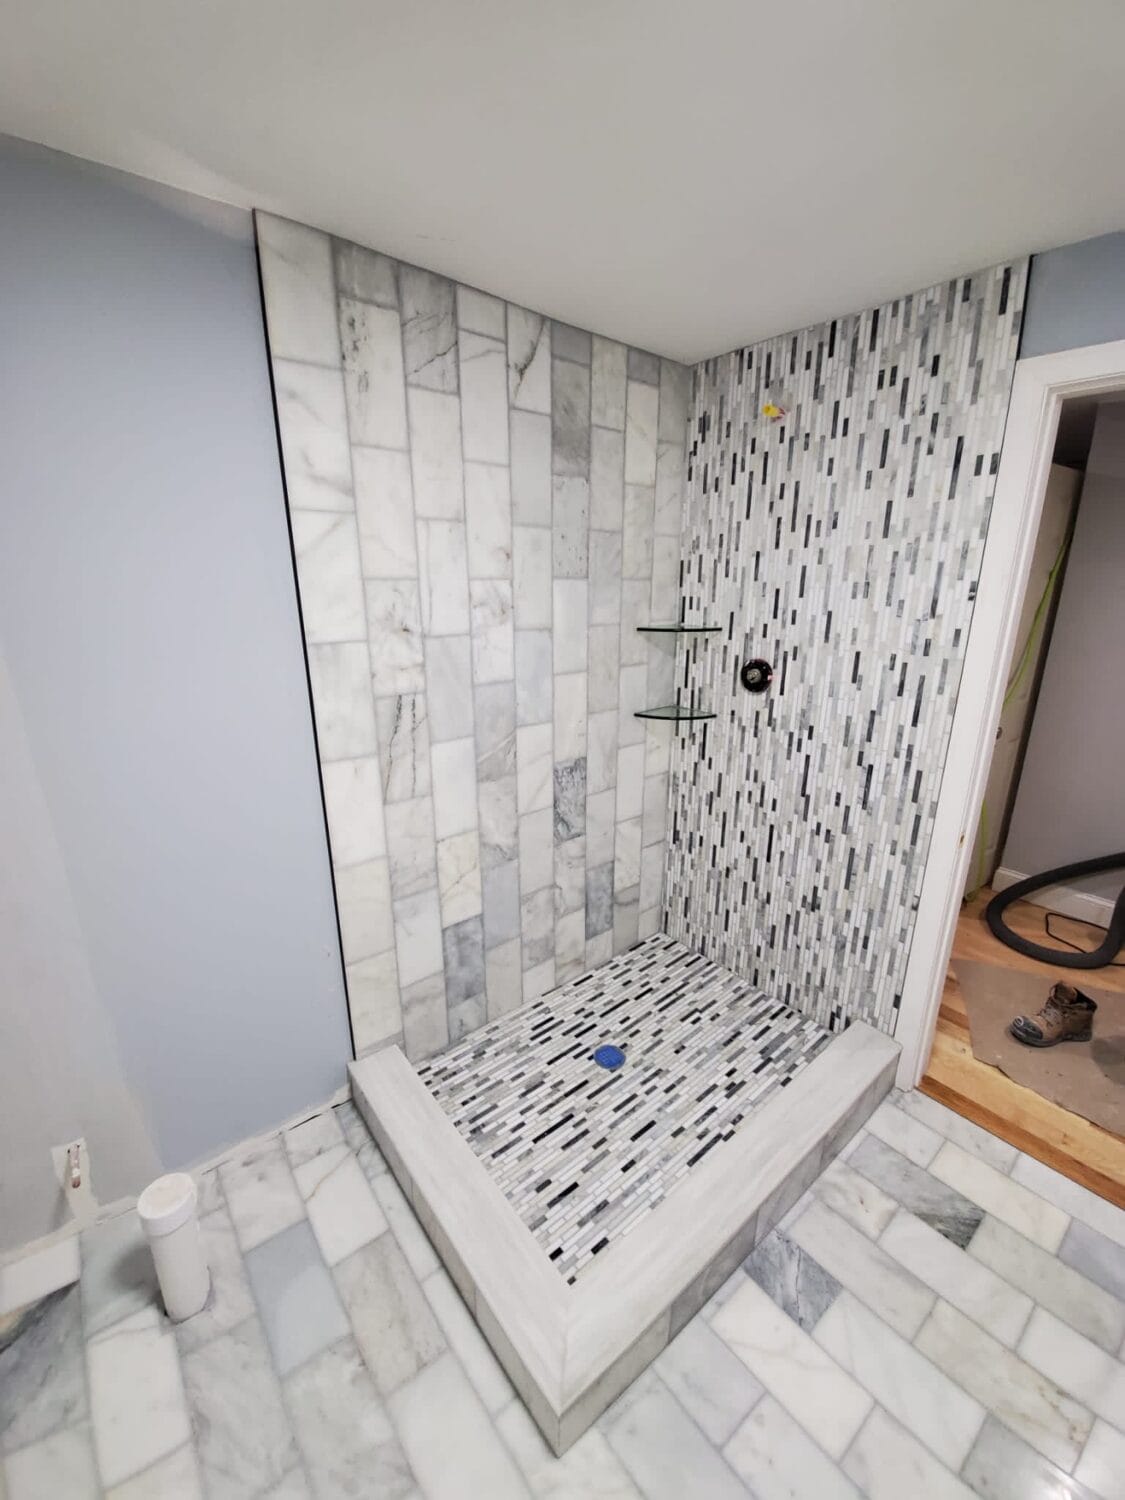 New tile floor and shower